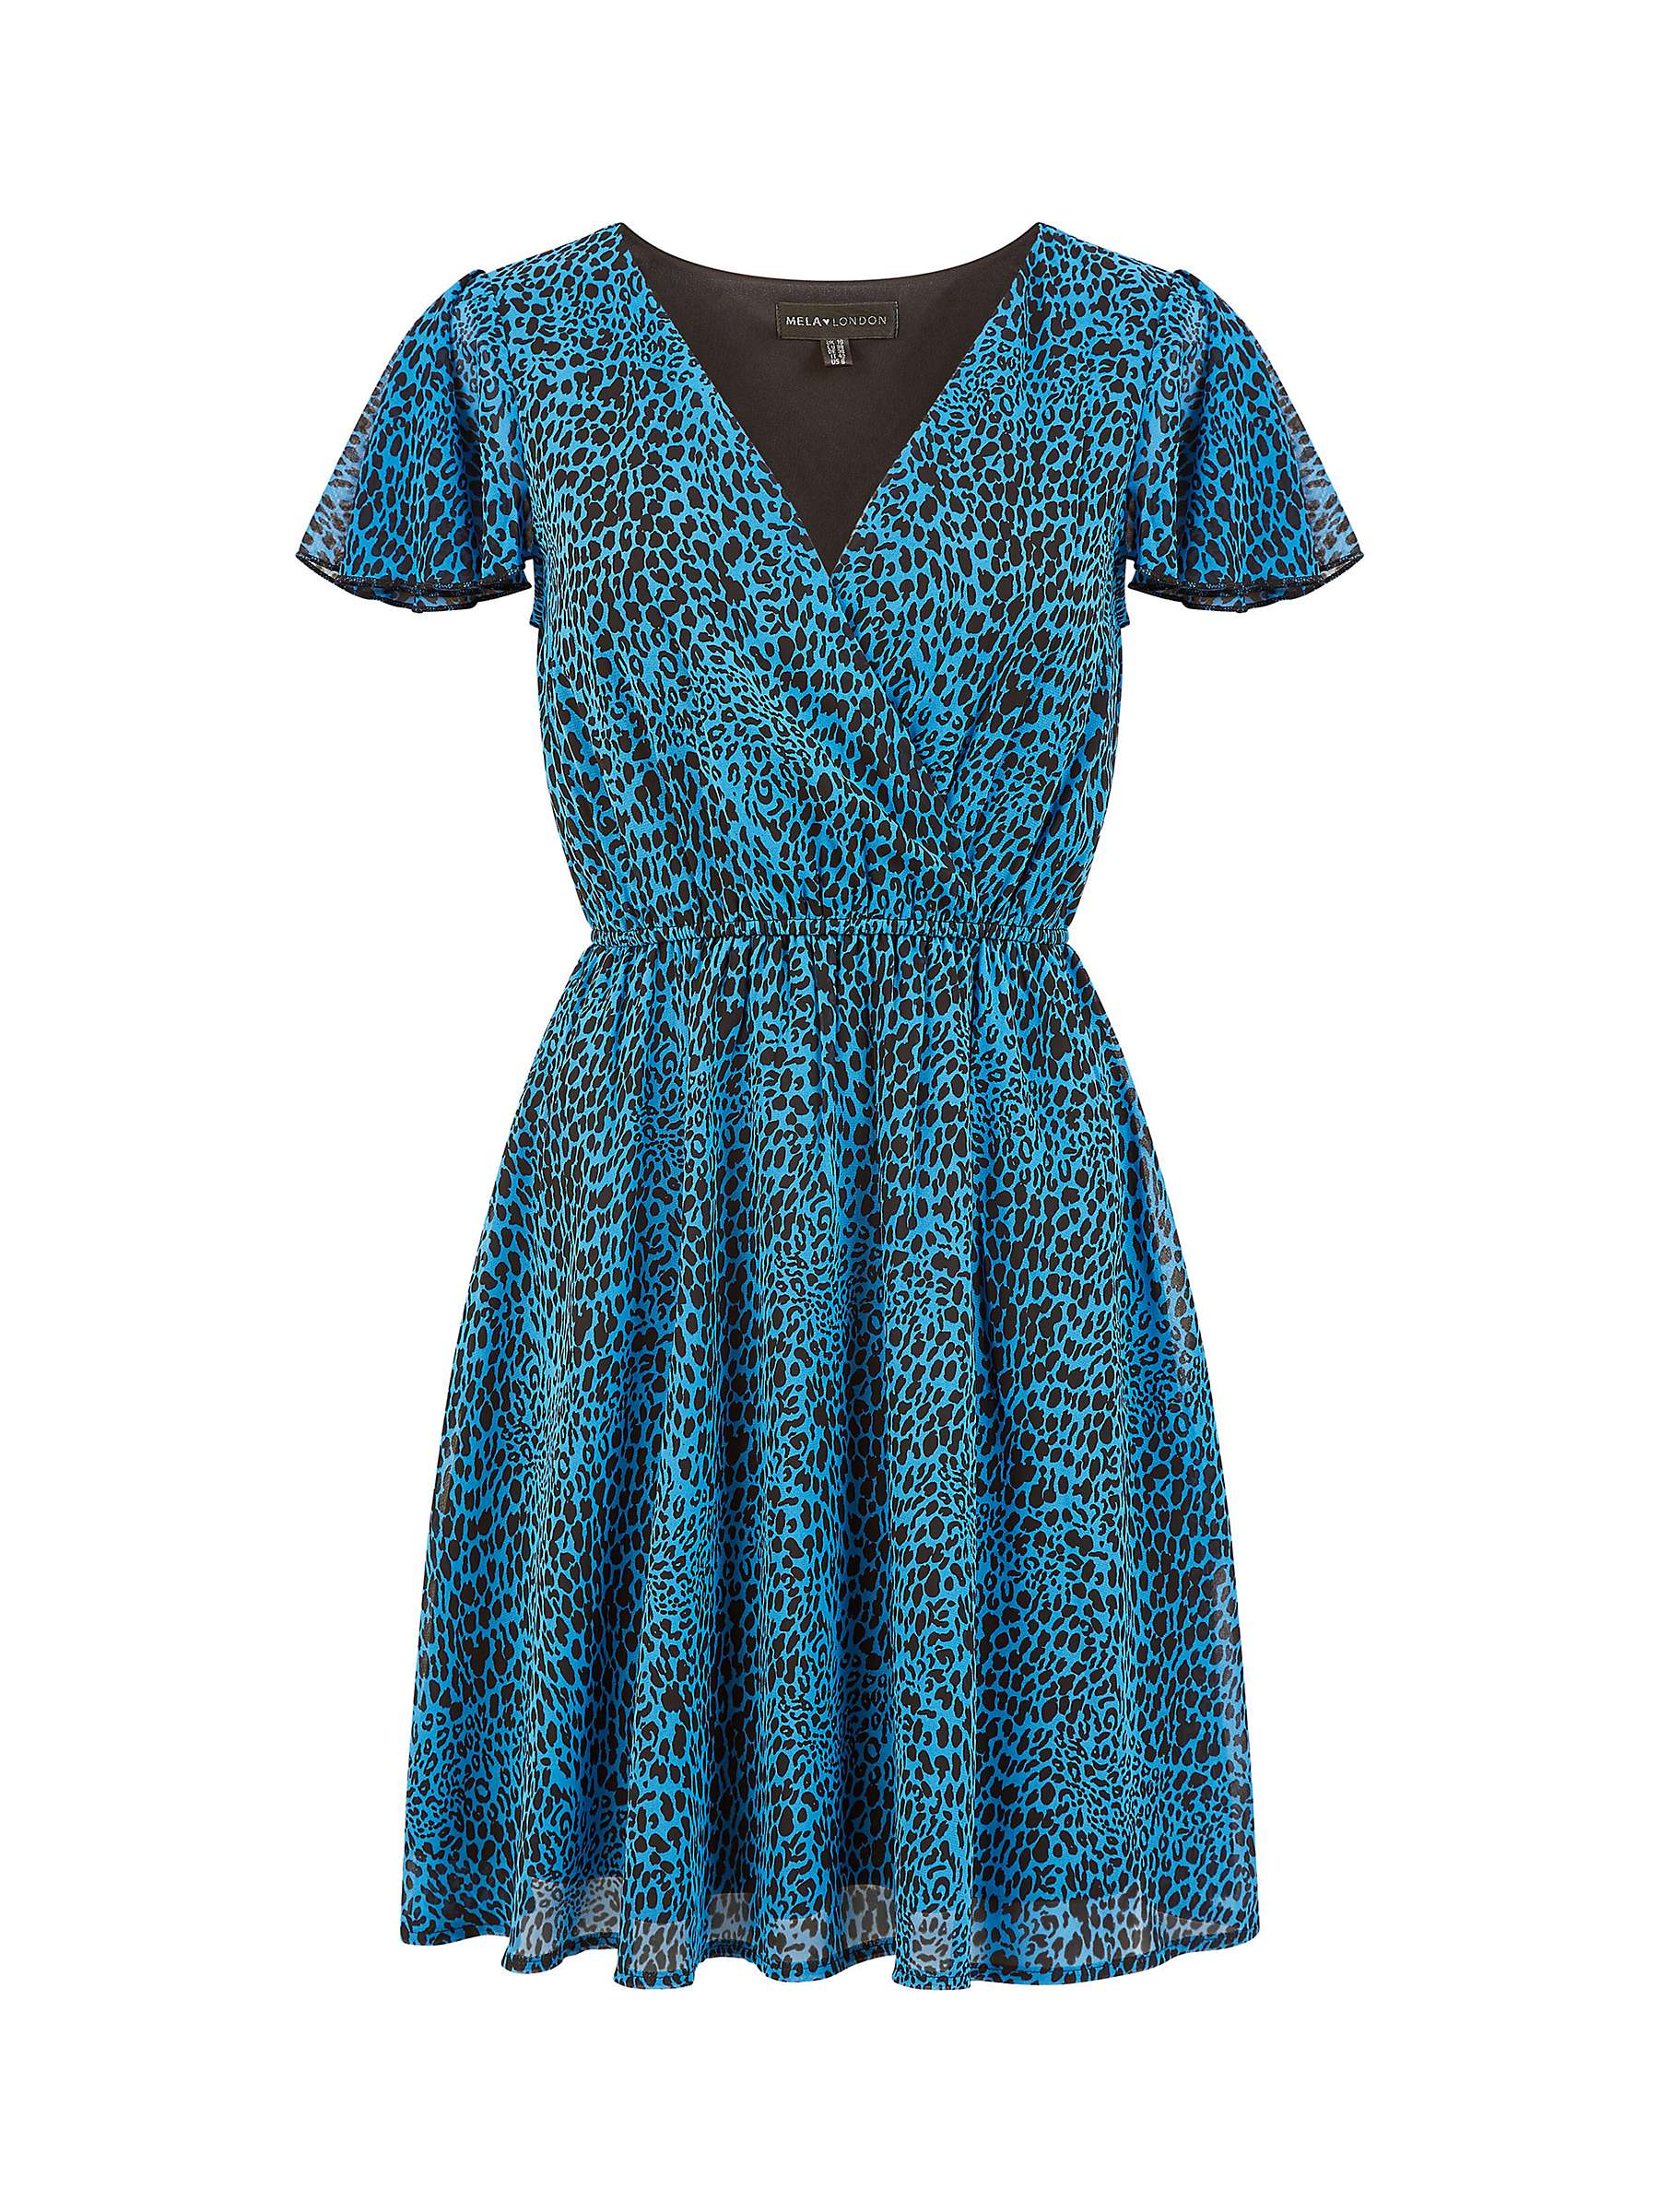 Buy Mela London Leopard Skater Mini Dress, Blue Online at johnlewis.com